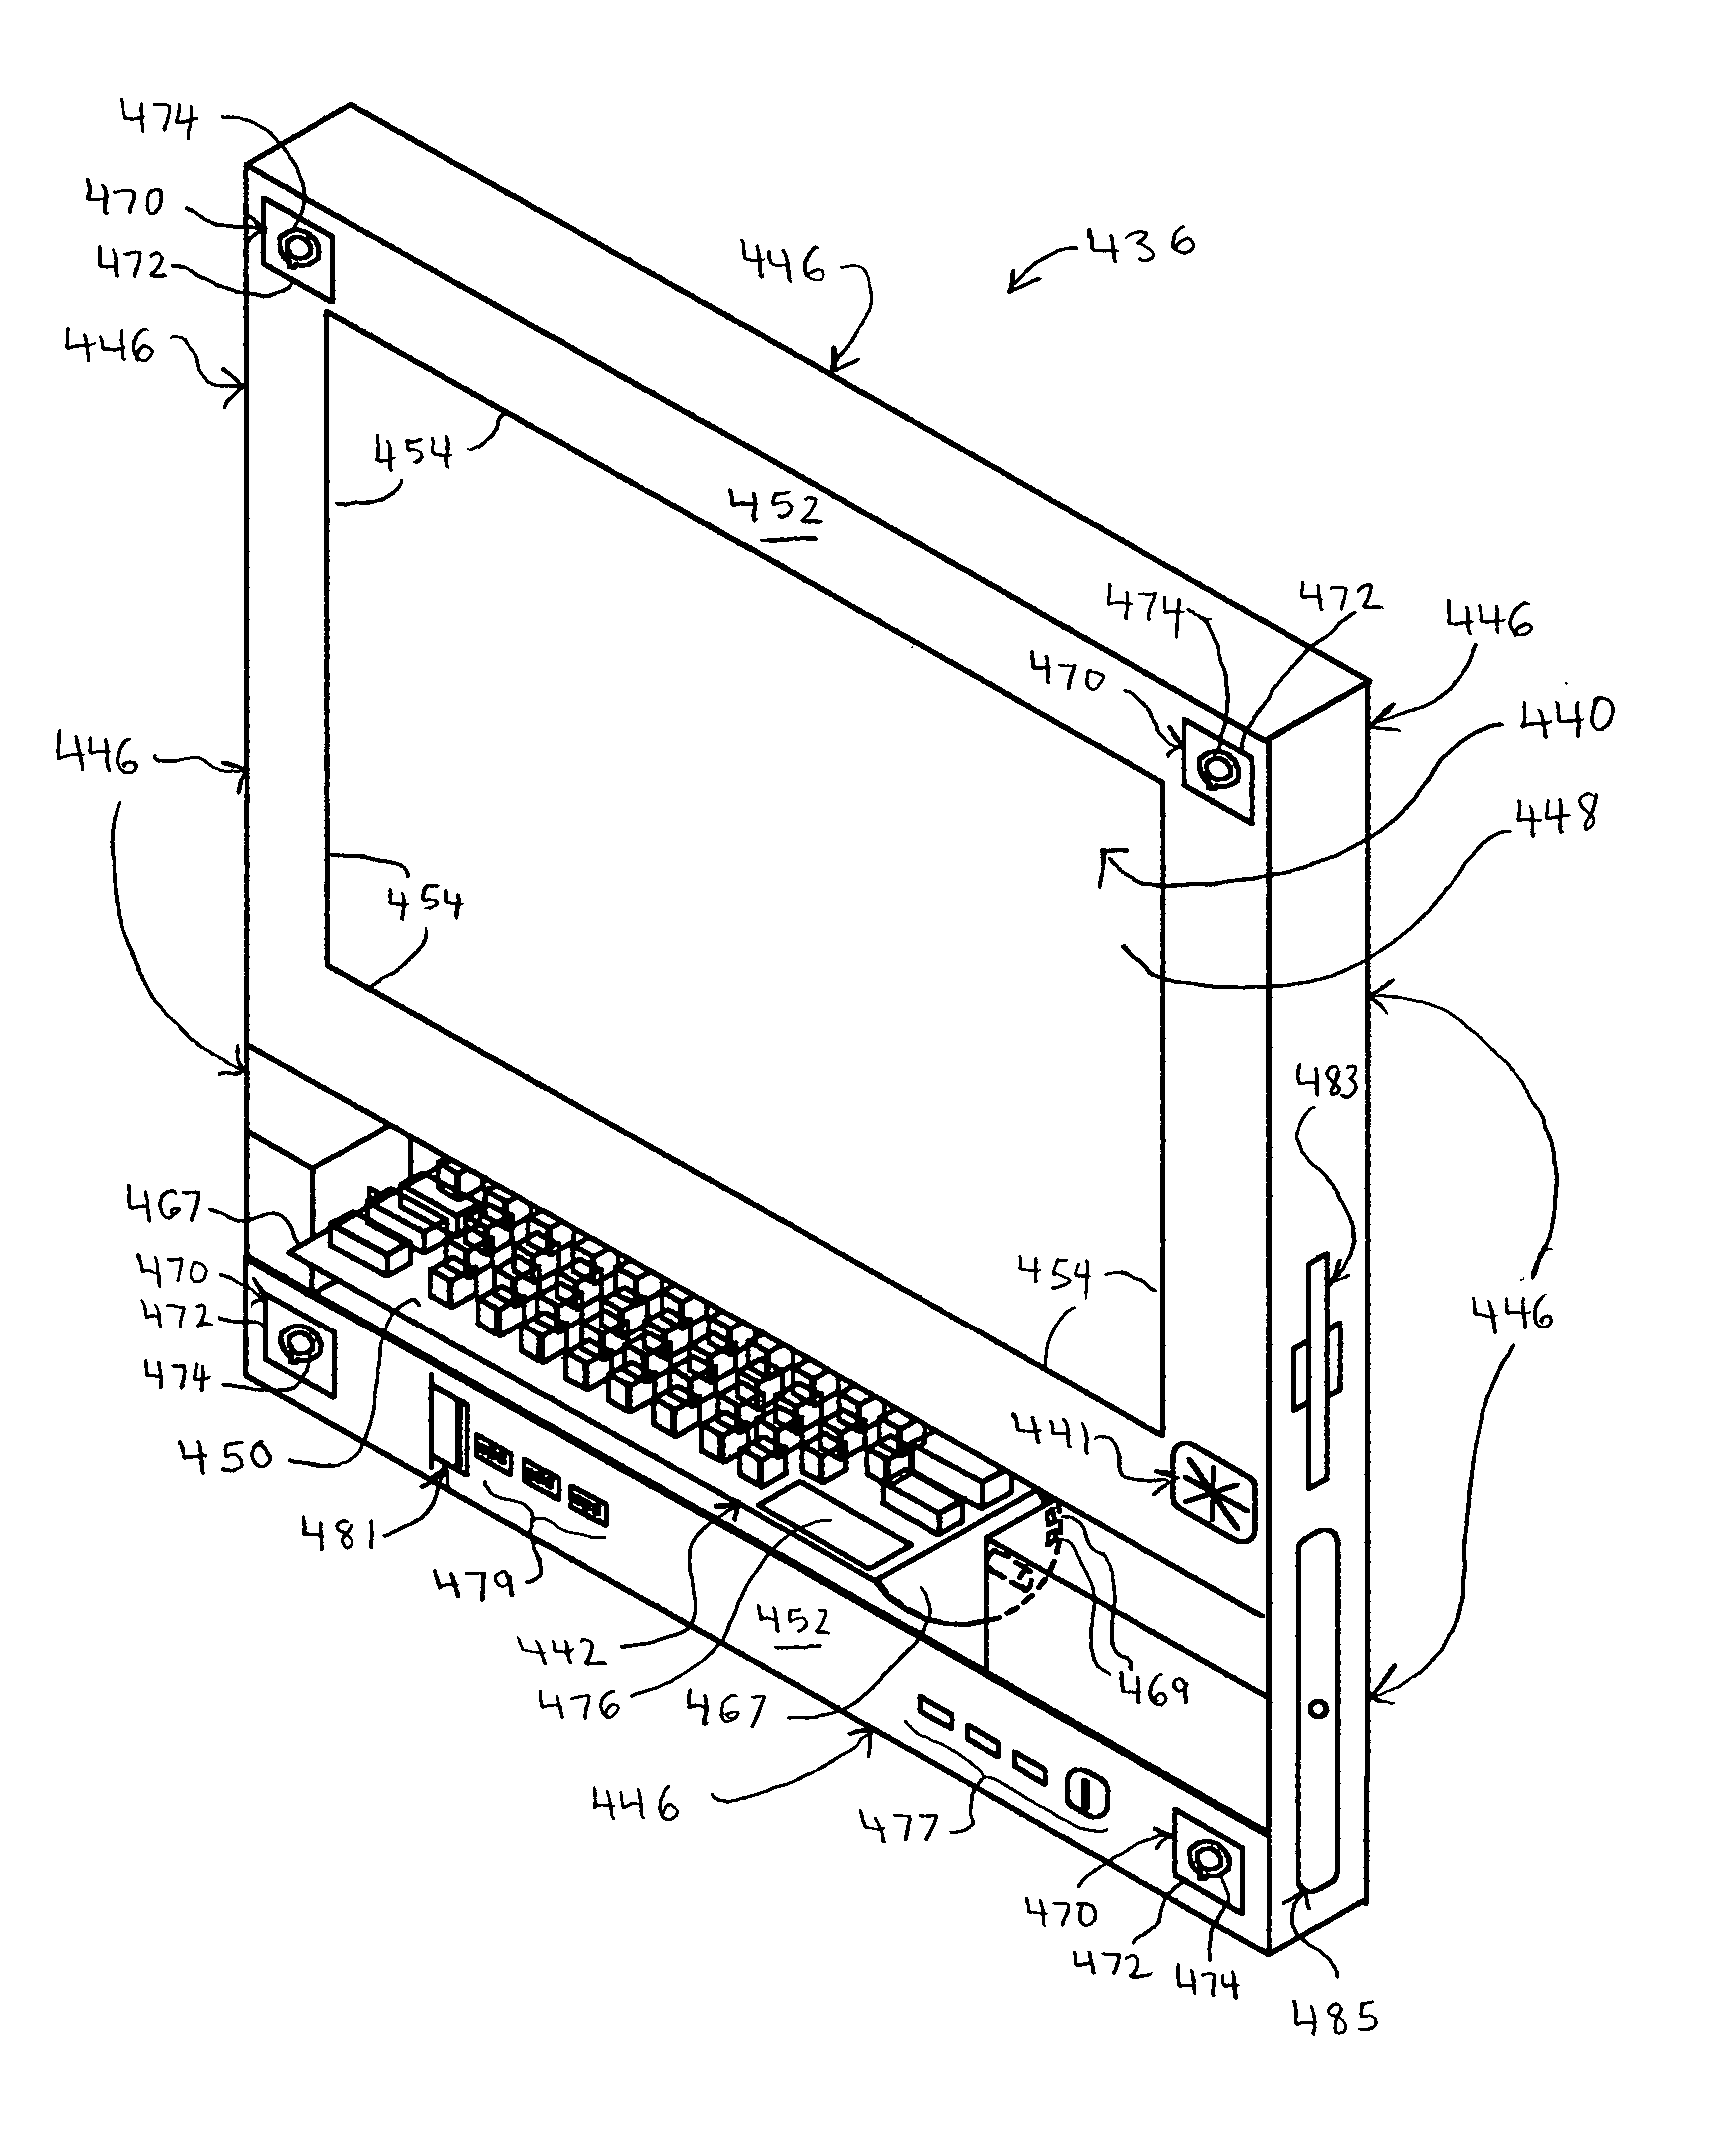 Wall-mountable computer having an integrated keyboard